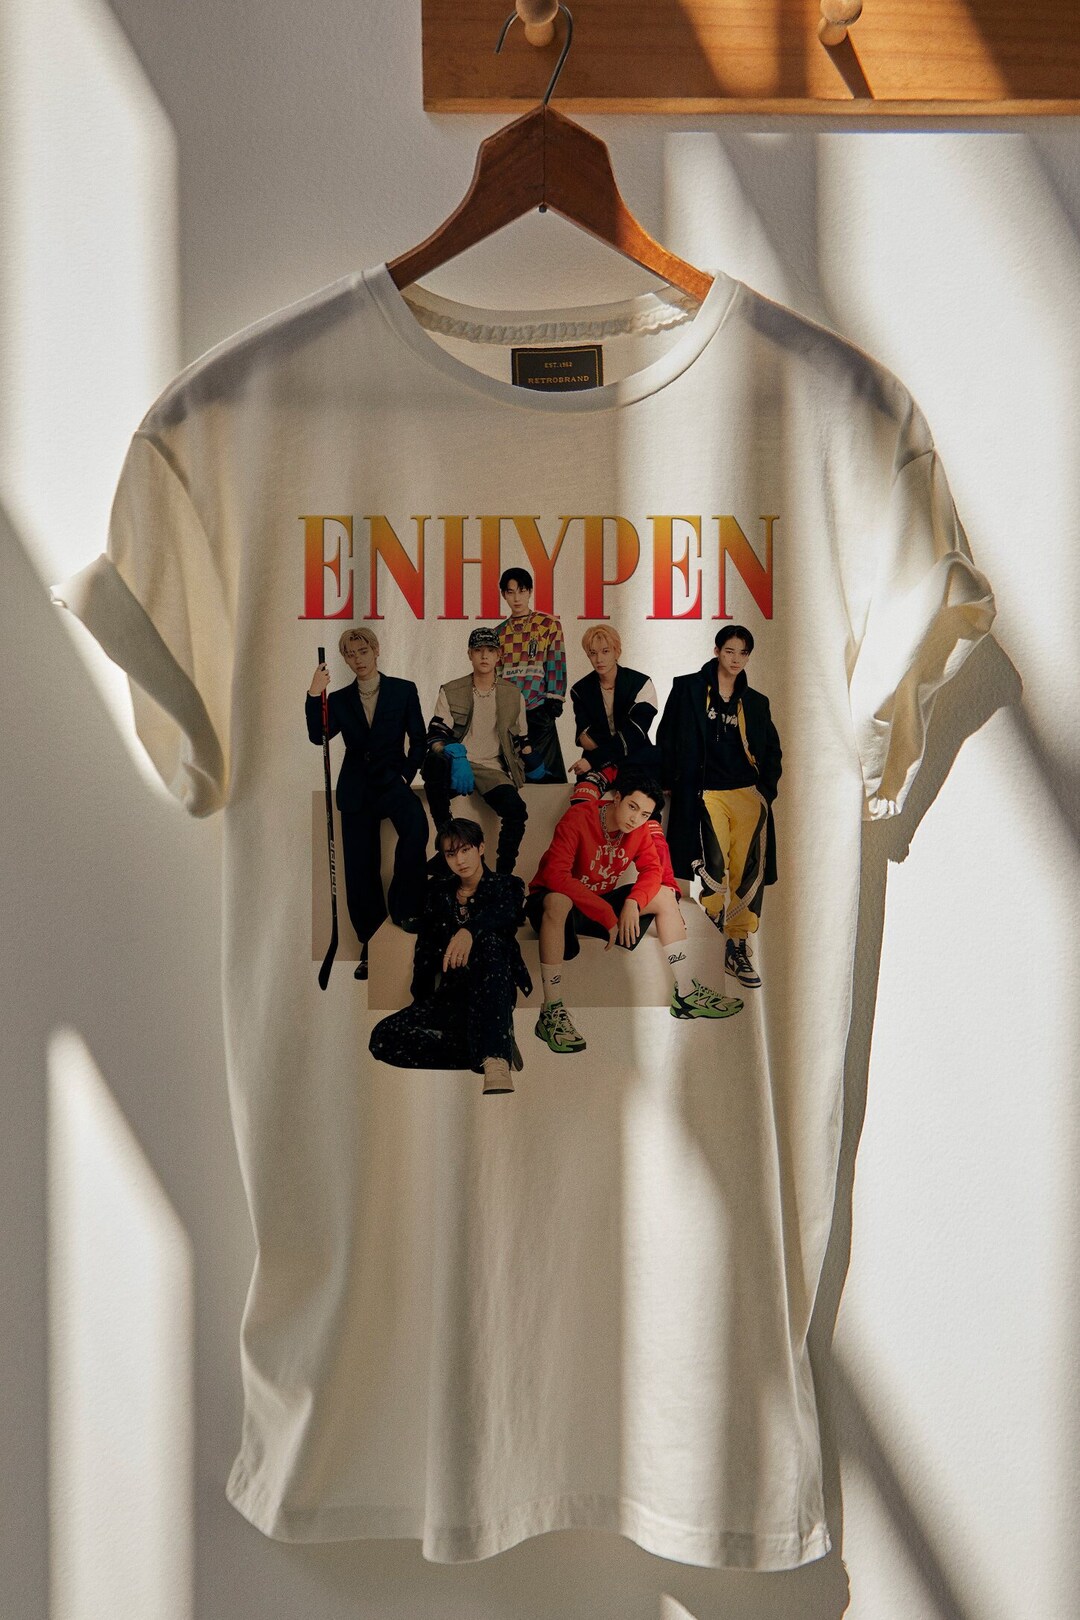 ENHYPEN Shirt ENHYPEN Graphic Tee ENHYPEN 90s Vintage - Etsy